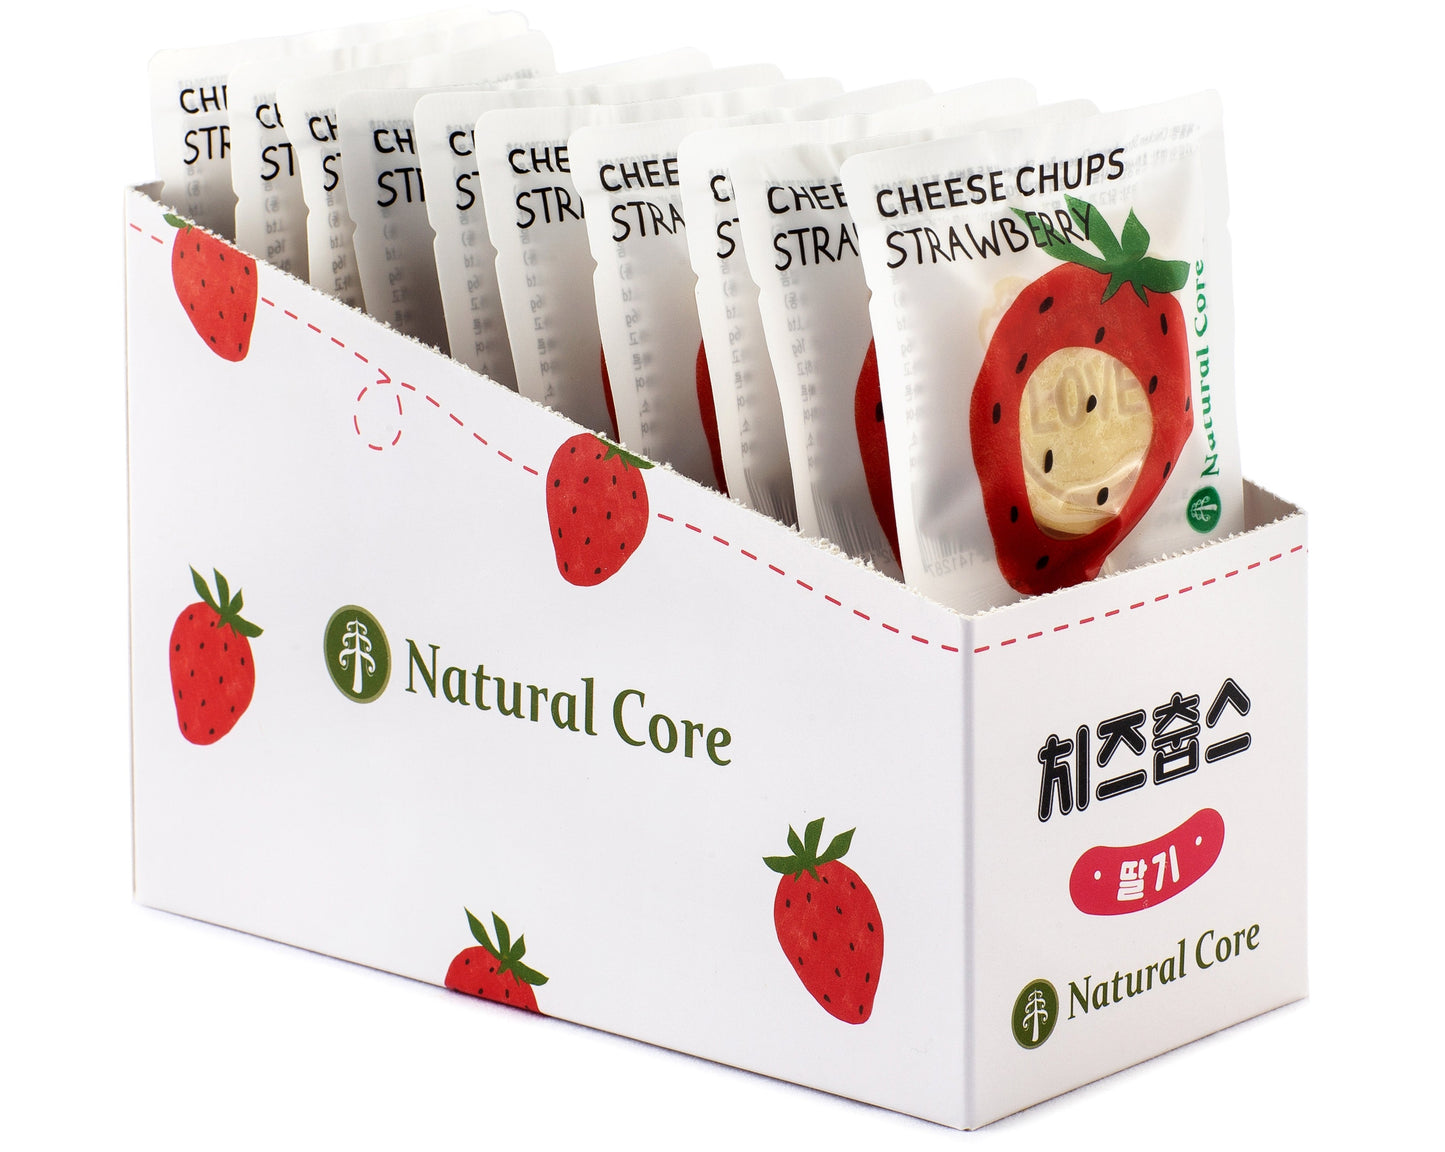 Natural Core Cheese Chups Strawberries 16g